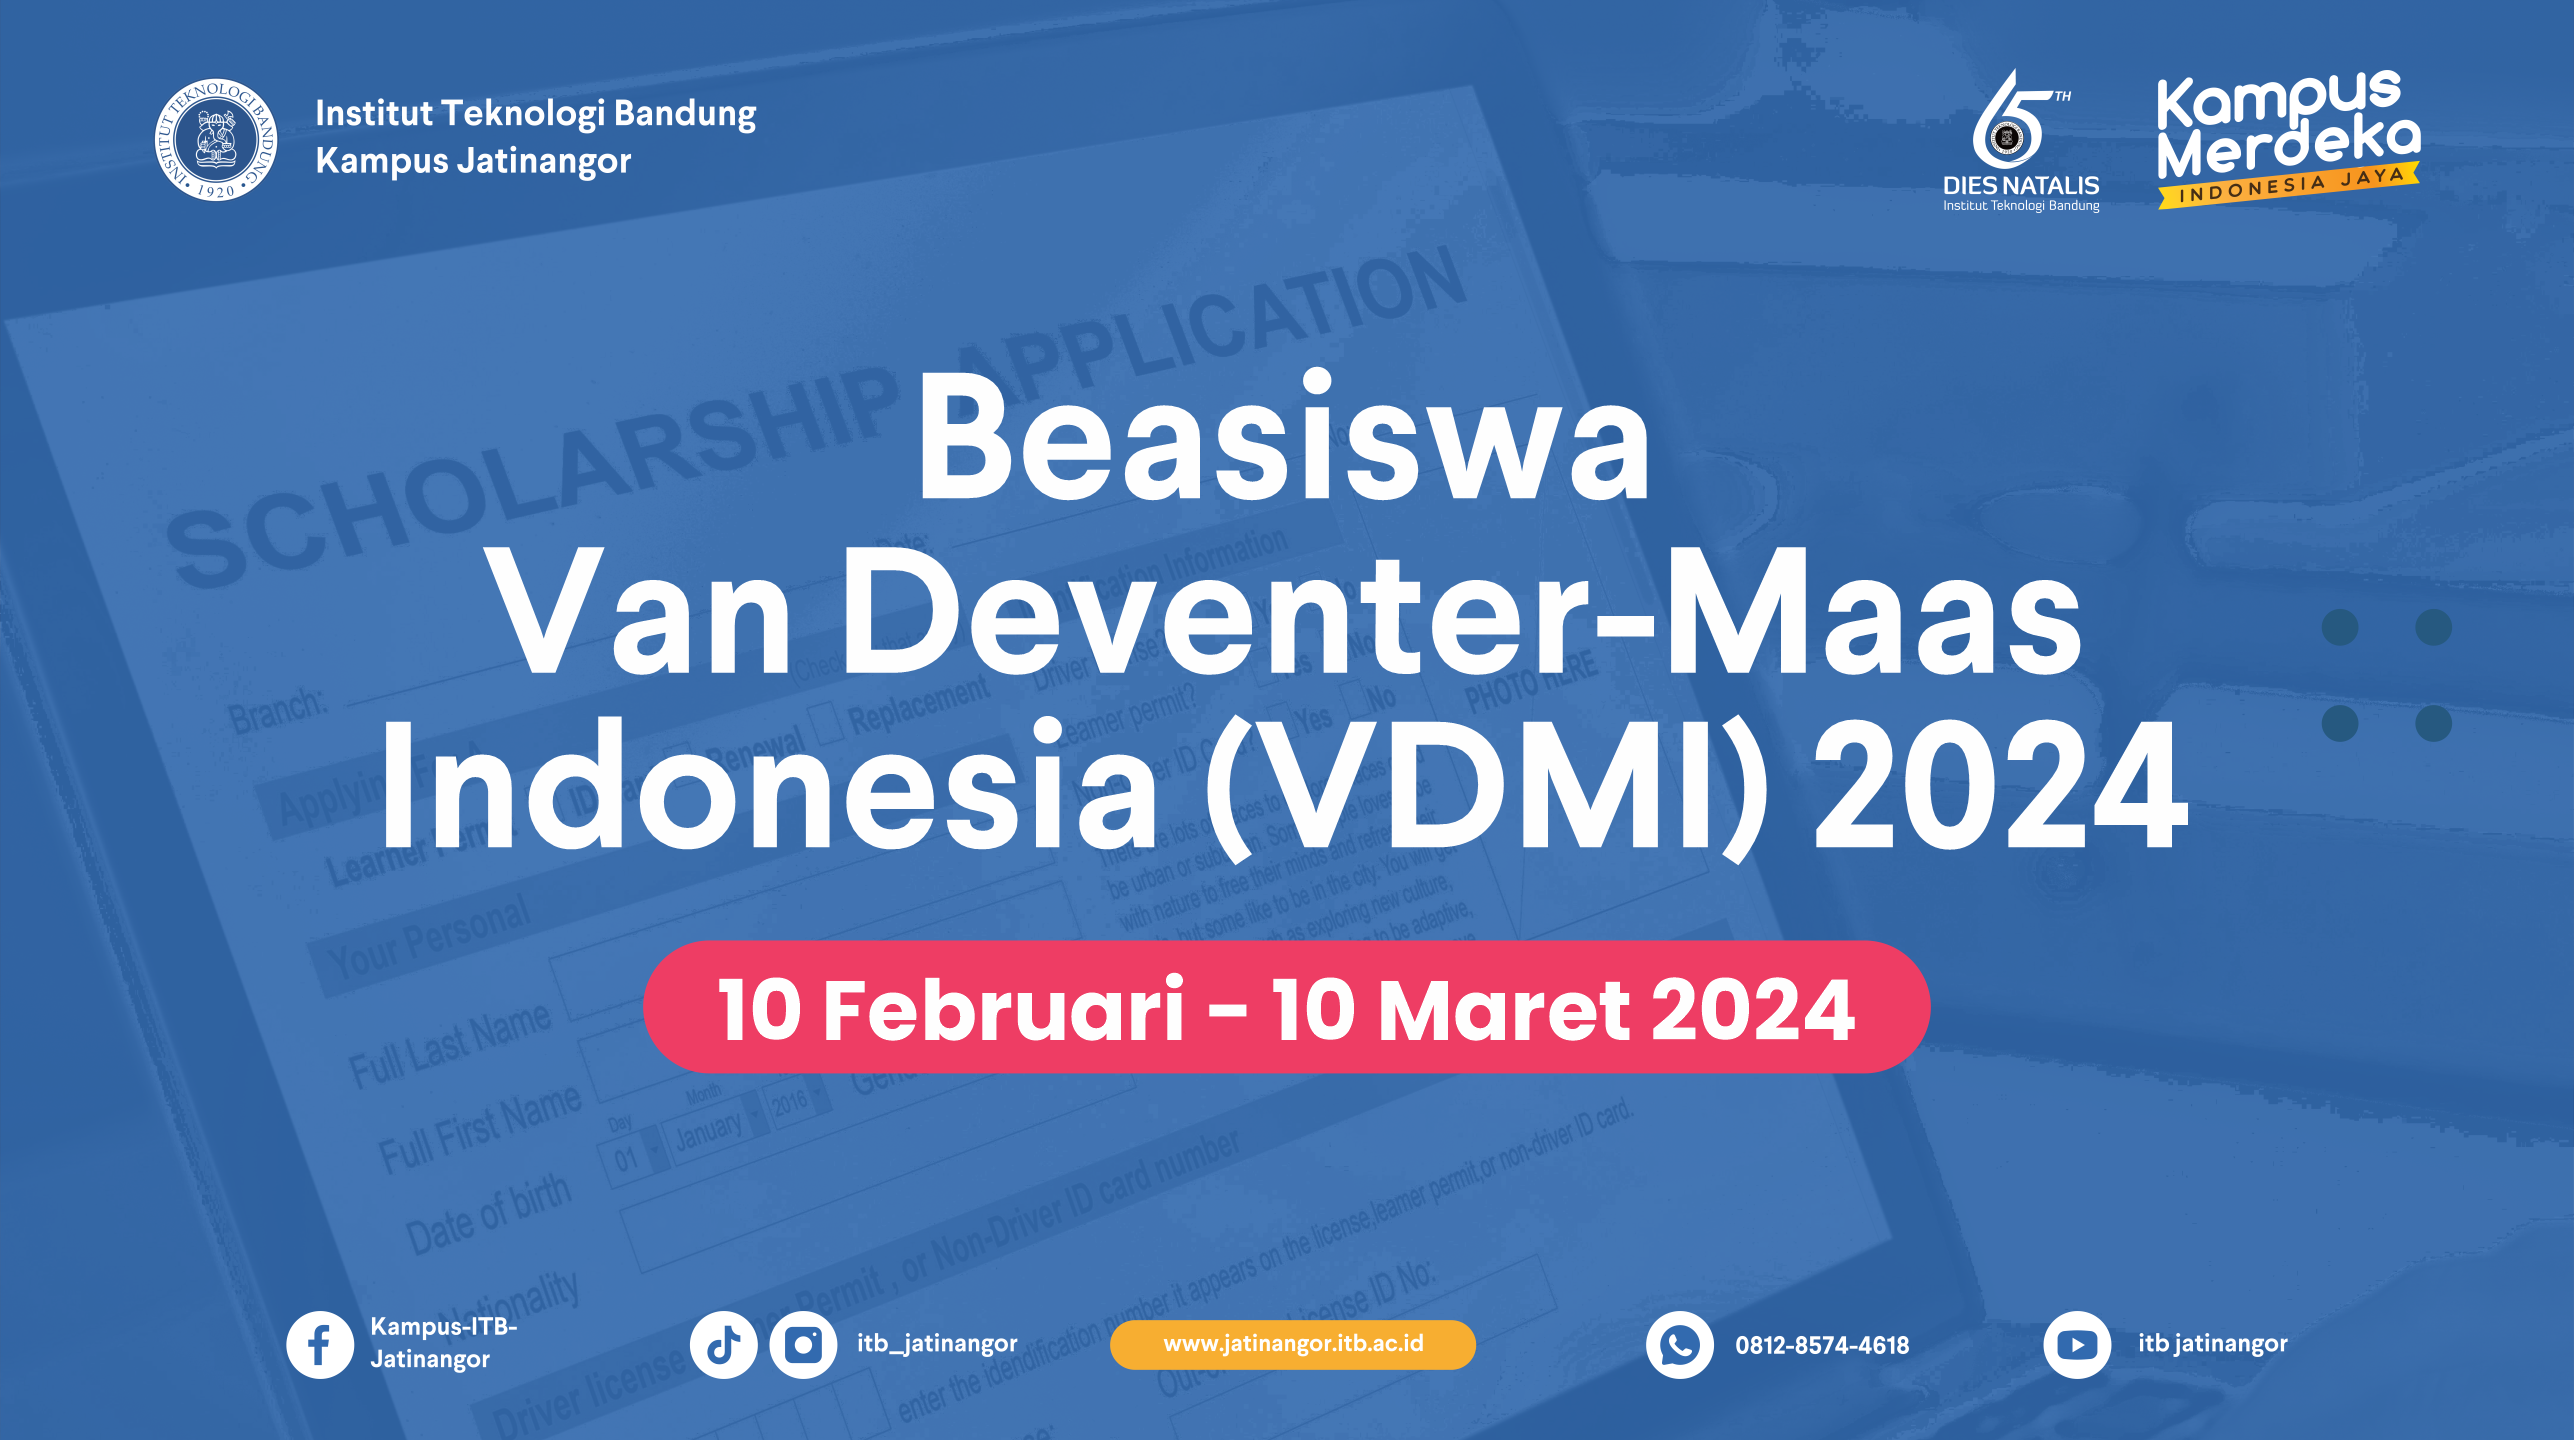 Beasiswa Van Deventer-Maas Indonesia (VDMI) Tahun 2024